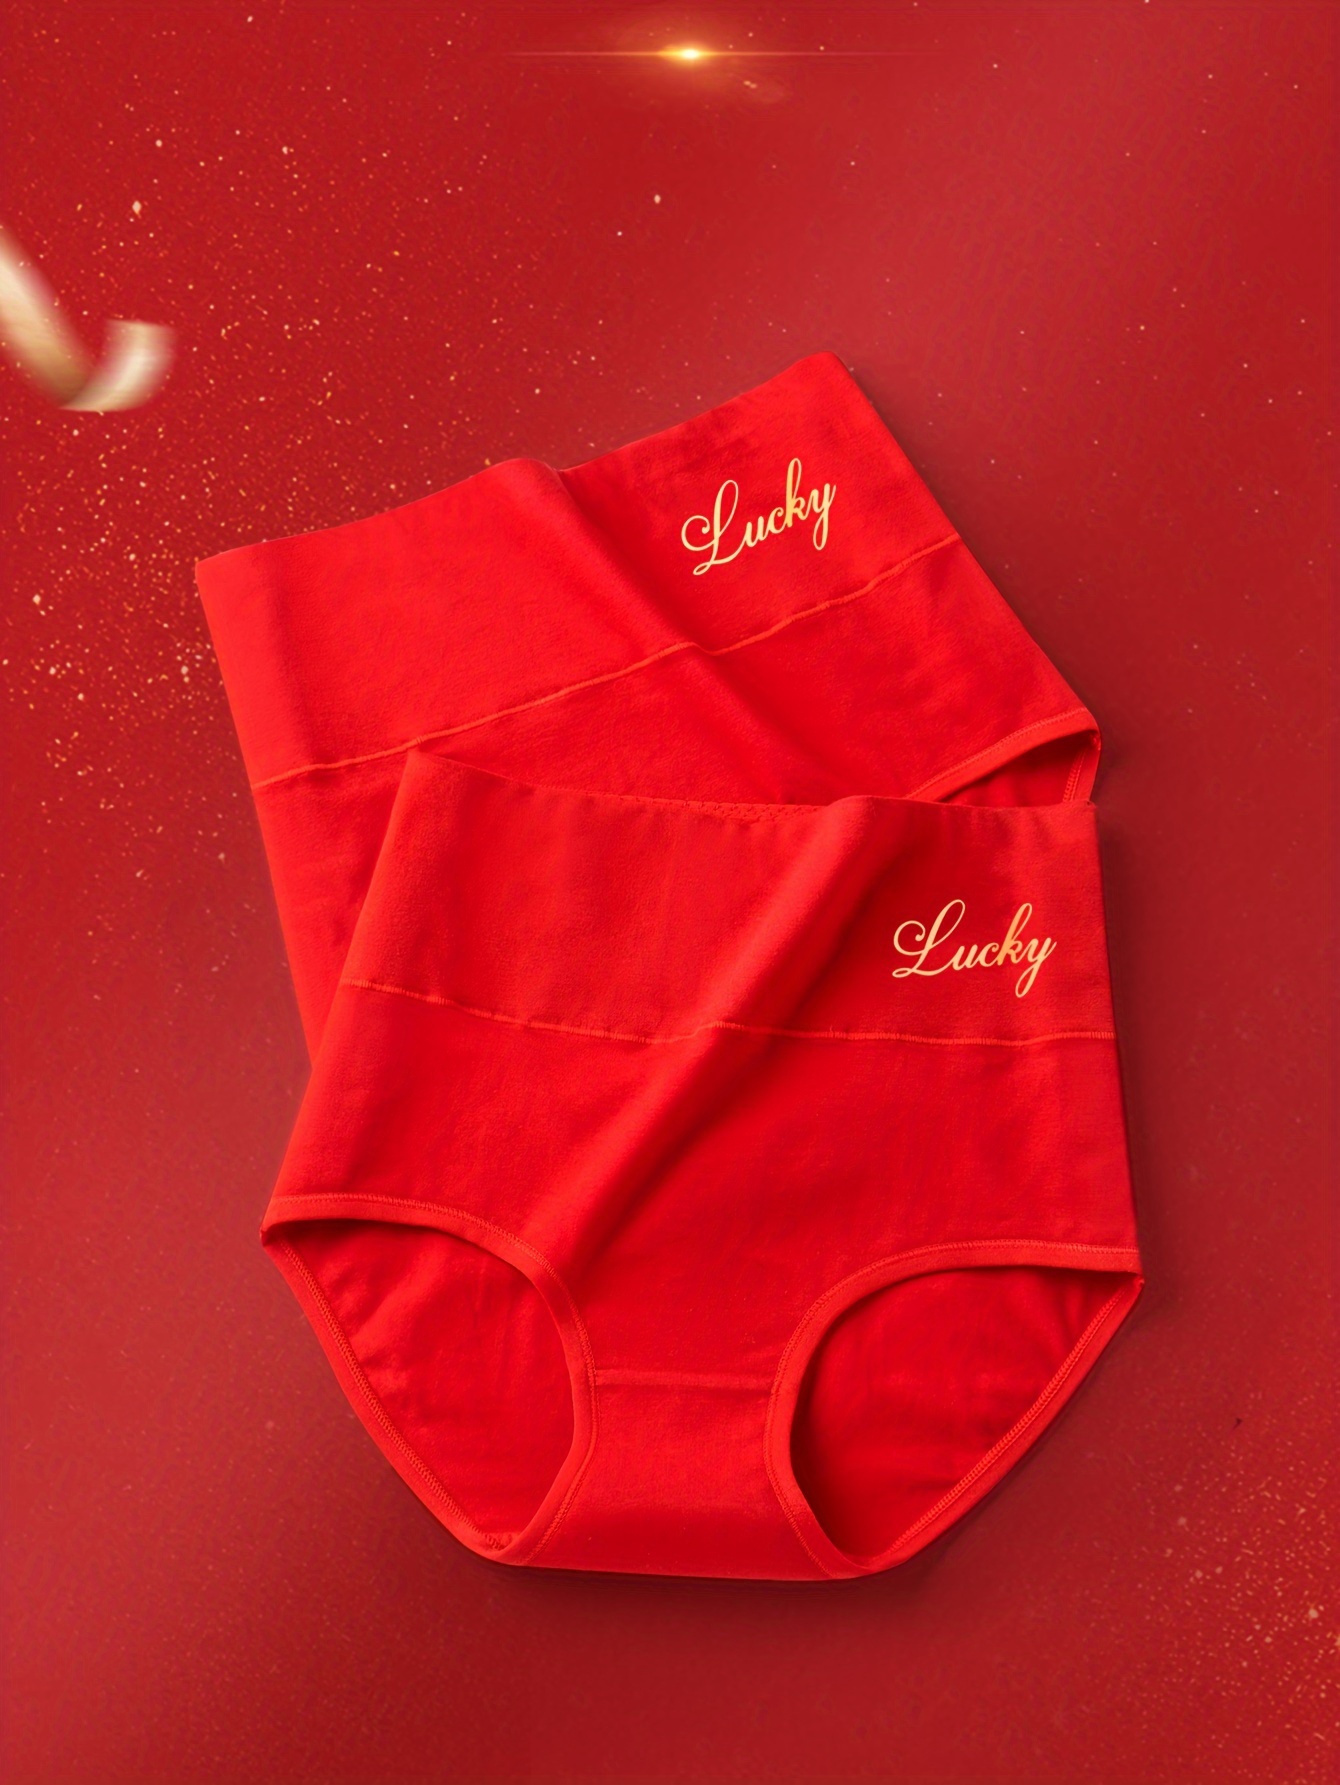 LANGSHA 5Pcs/Set Cotton Panties Women Luck Red Seamless Underwear